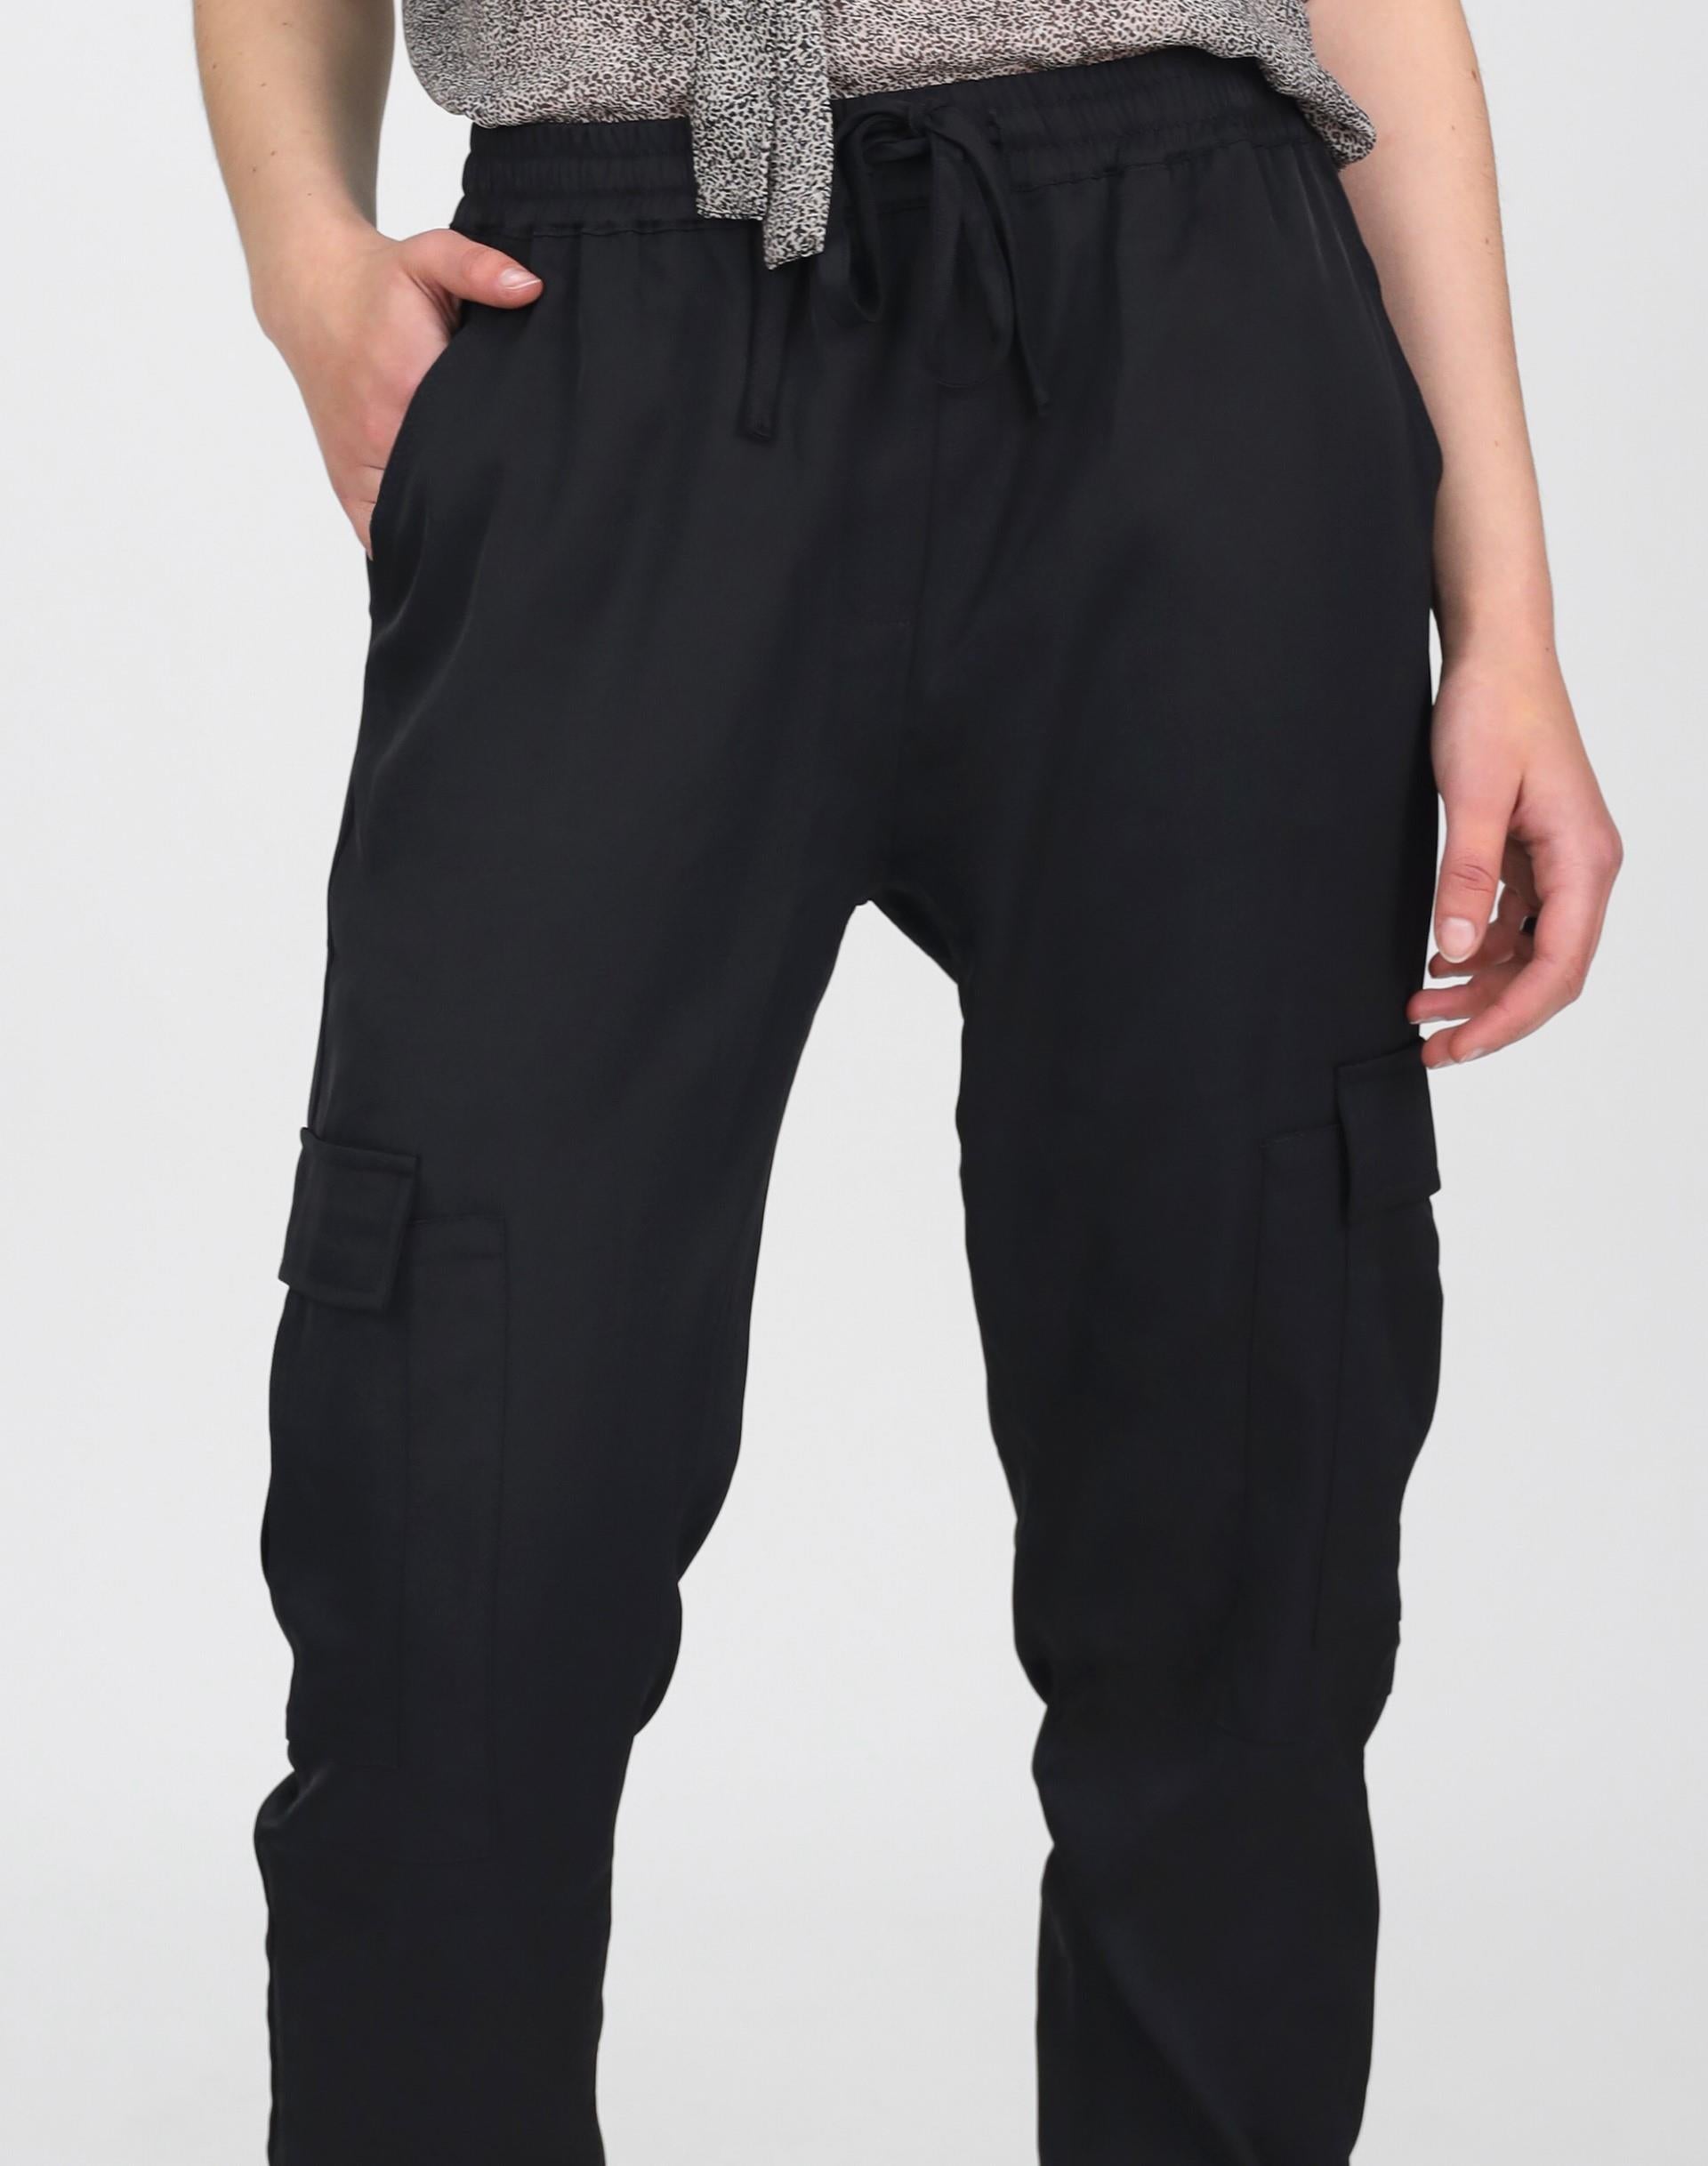 Twill Cargo Pant - Black - Pants - Full Length - Women's Clothing